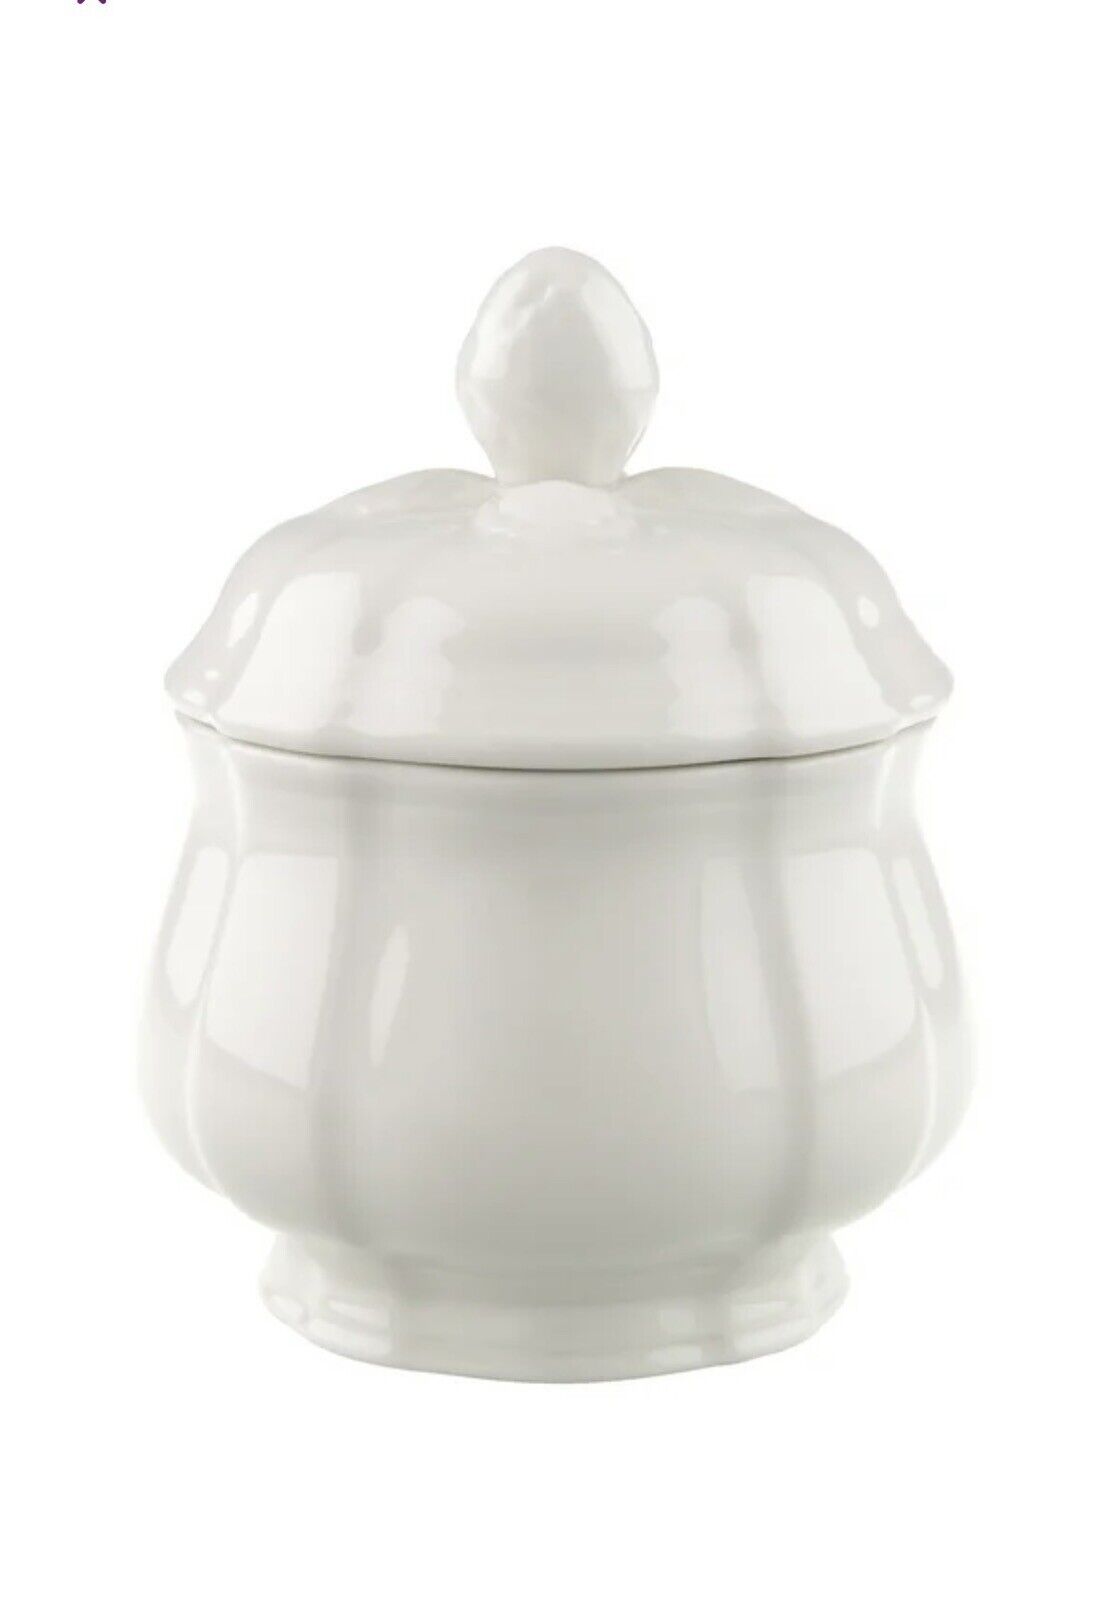 Villeroy & Boch Manoir Sugar Bowl & Lid White Porcelain Scalloped Edge EUC